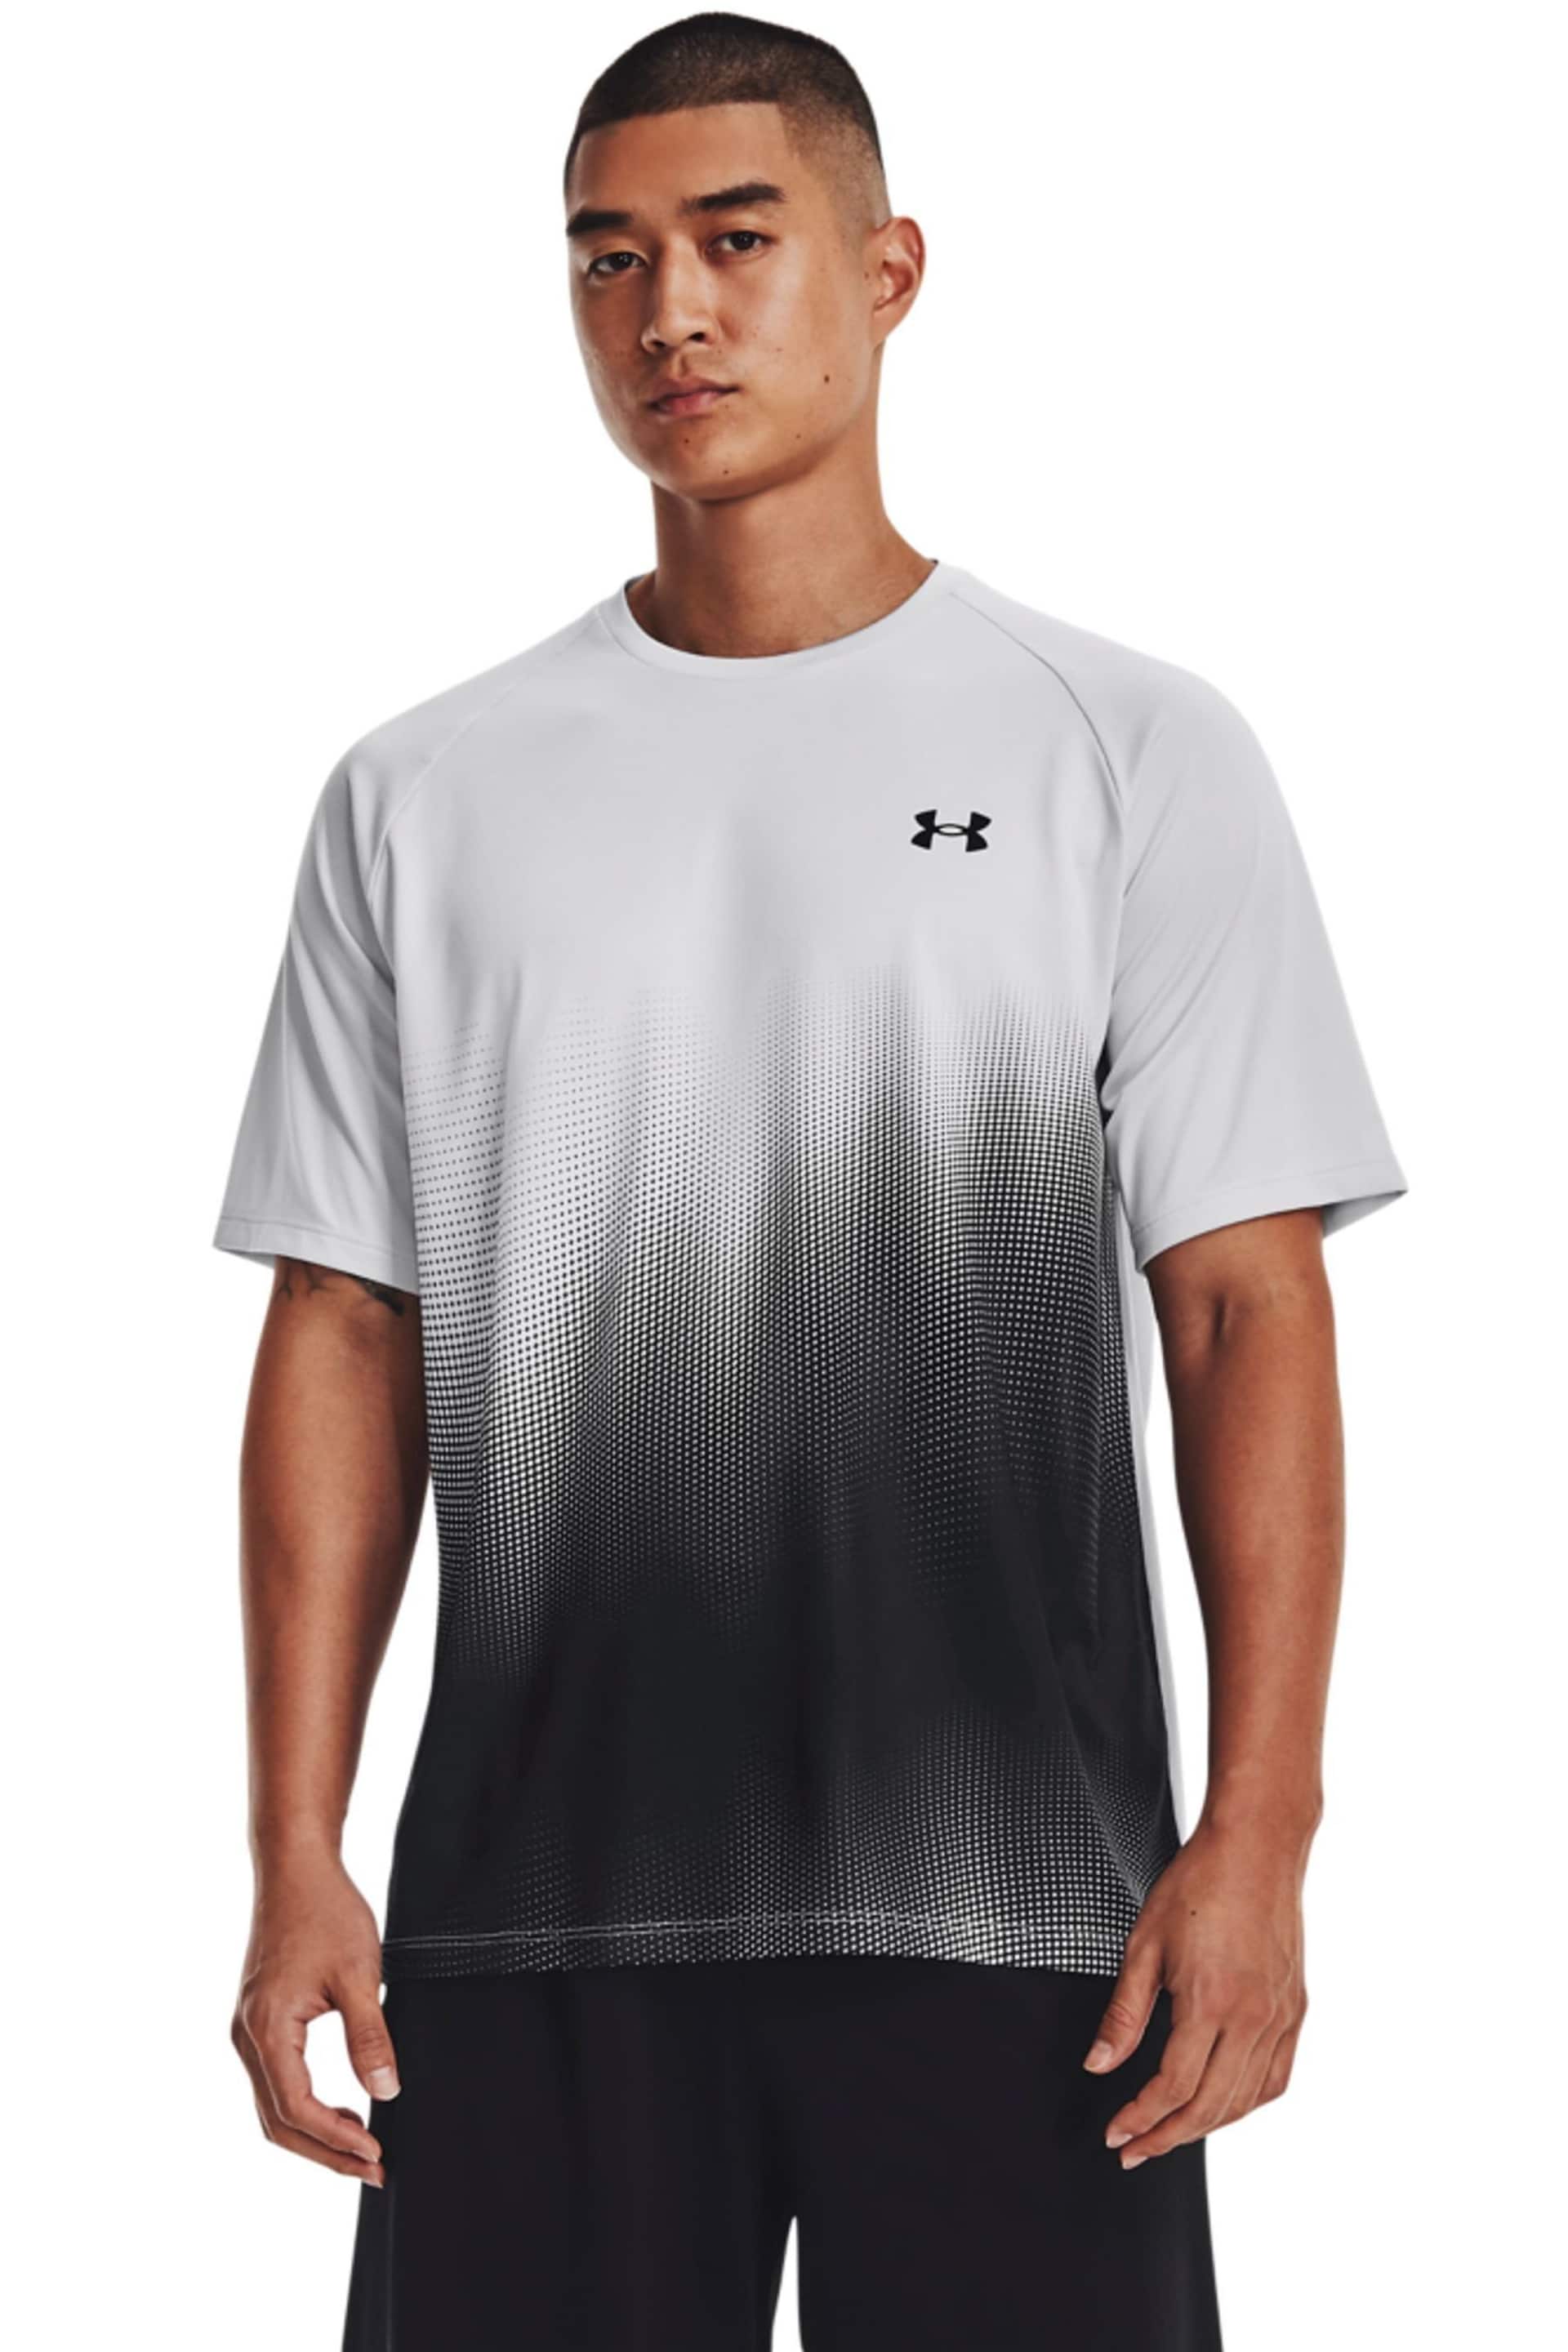 Under Armour Grey Tech Fade Short Sleeve T-Shirt - Image 1 of 6